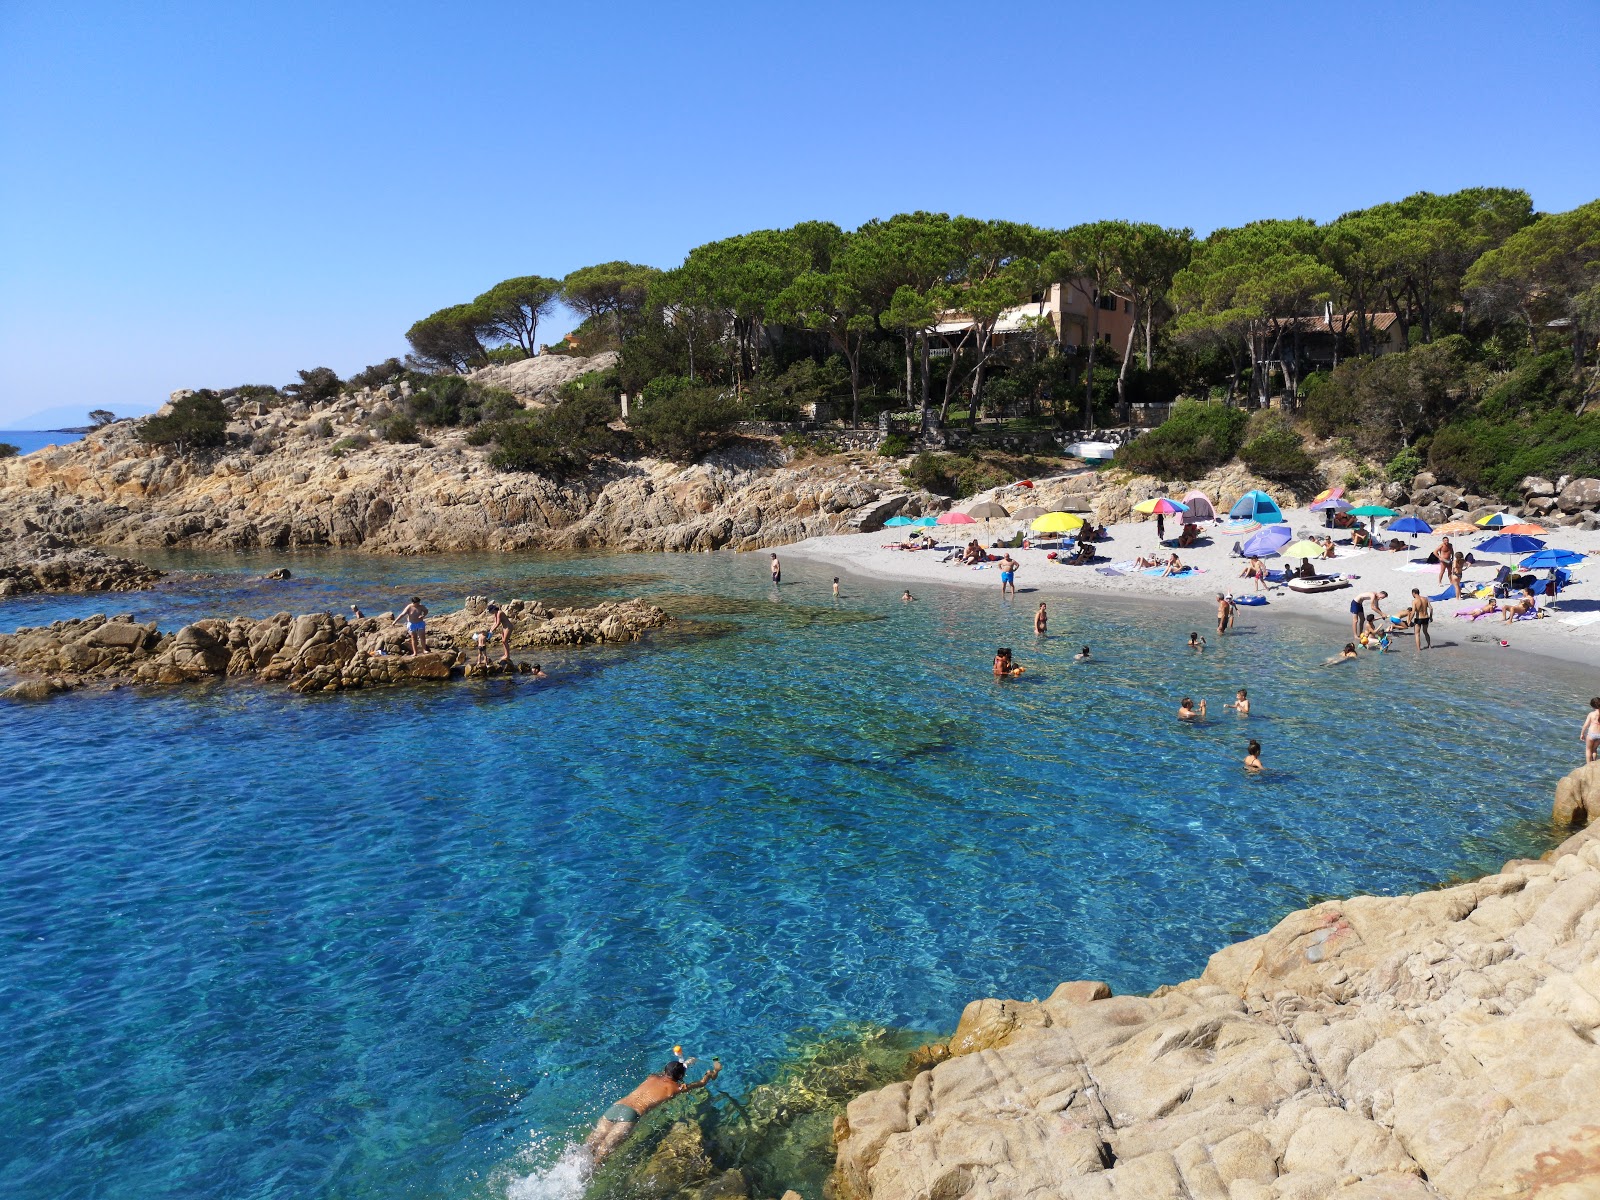 Spiaggia Di Cala Liberotto'in fotoğrafı parlak ince kum yüzey ile